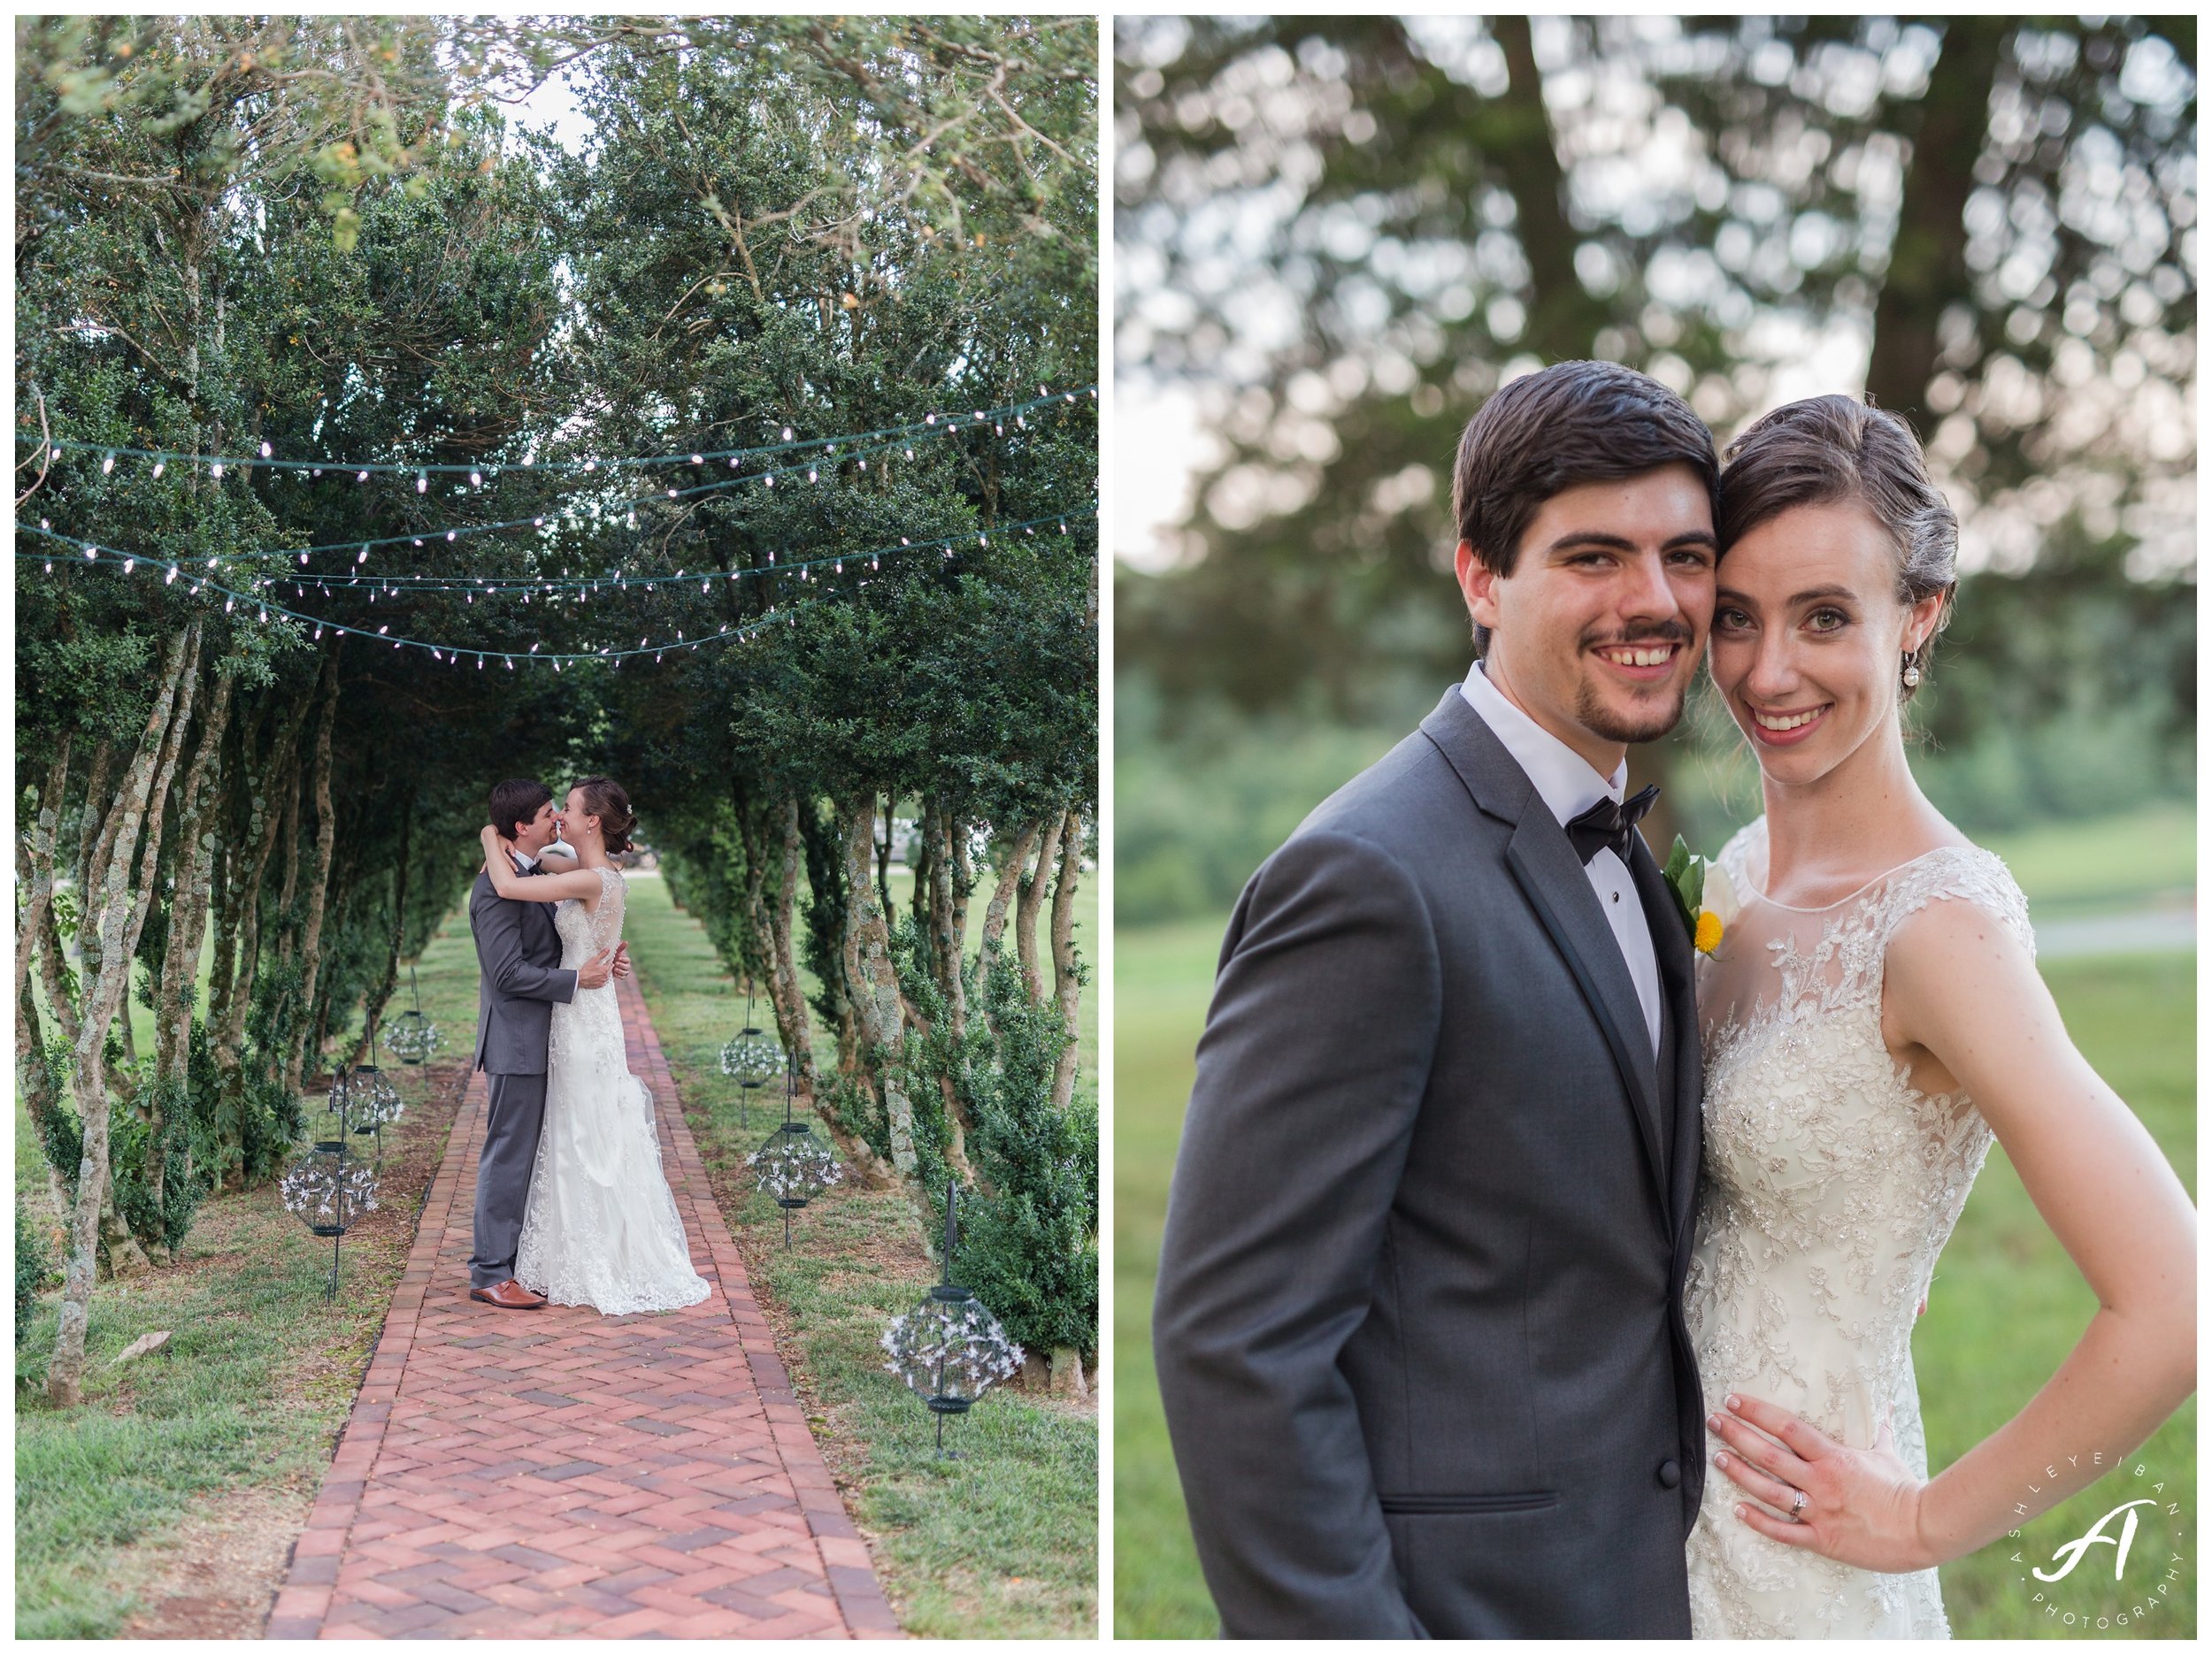 Charlottesville and Lynchburg Wedding Photographer || The Trivium Estate Wedding || www.ashleyeiban.com